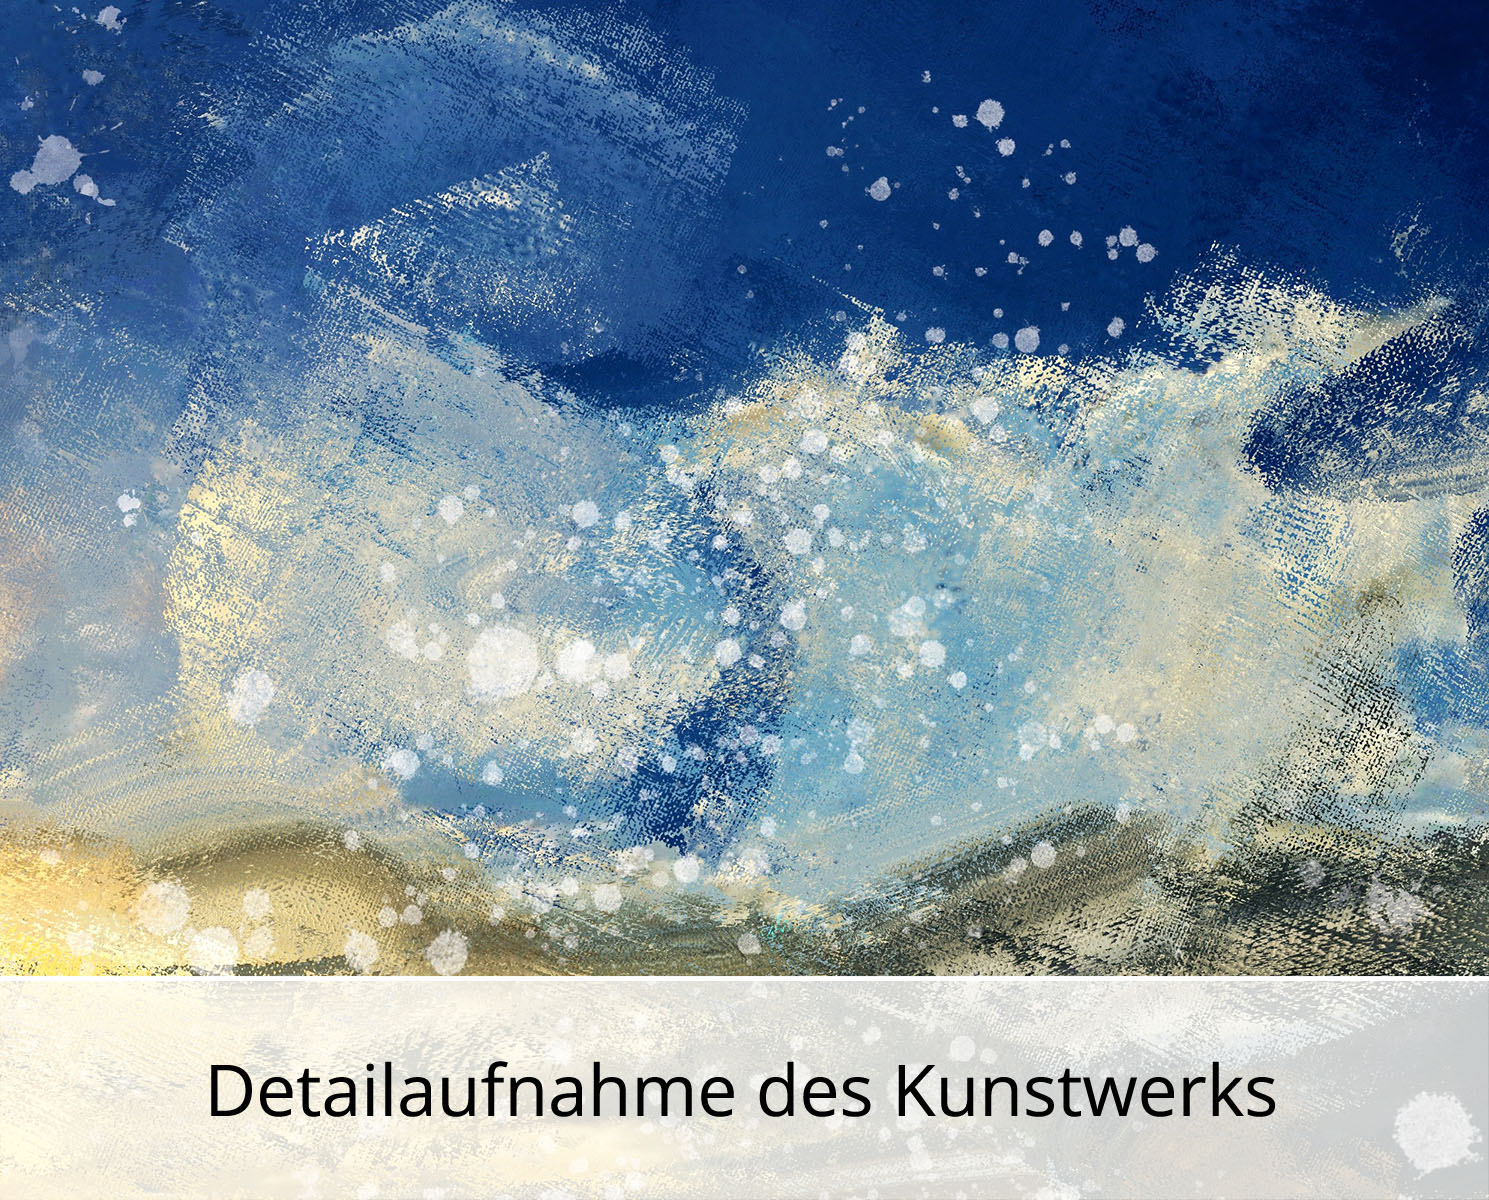 H. Mühlbauer-Gardemin: "Sturm an der Küste III", Moderne Pop Art, Original/serielles Unik